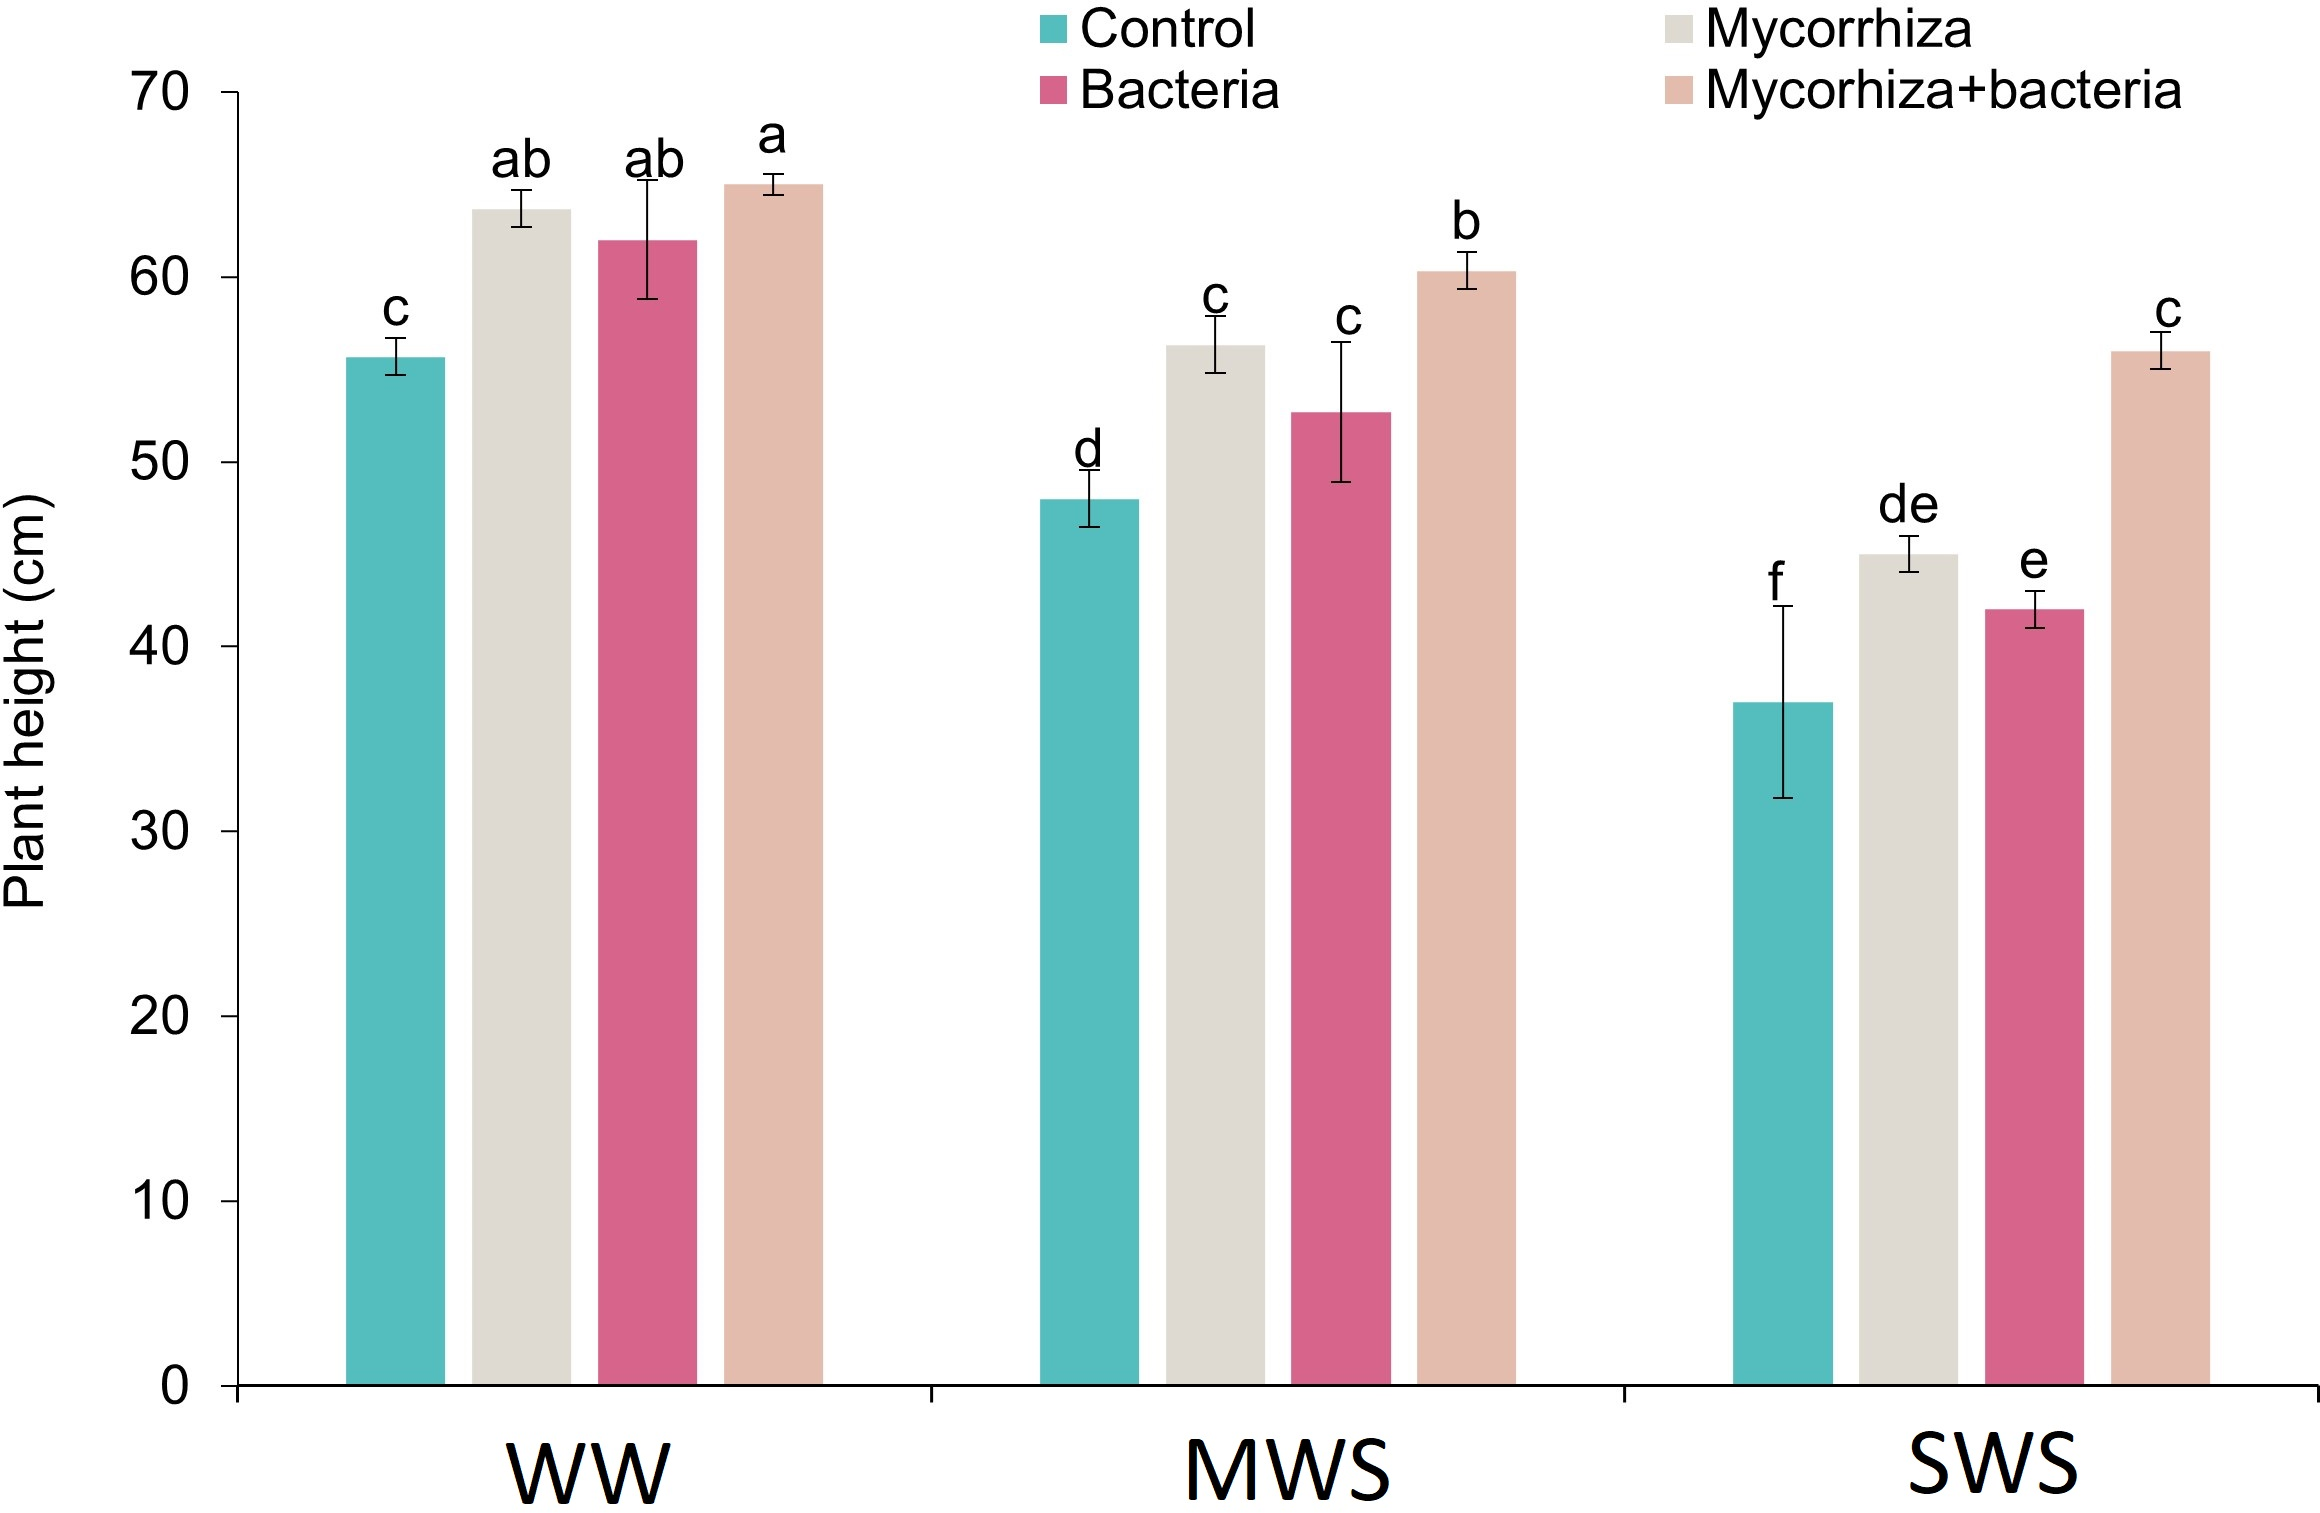 Co-inoculation of mycorrhizal fungi and plant growth-promoting